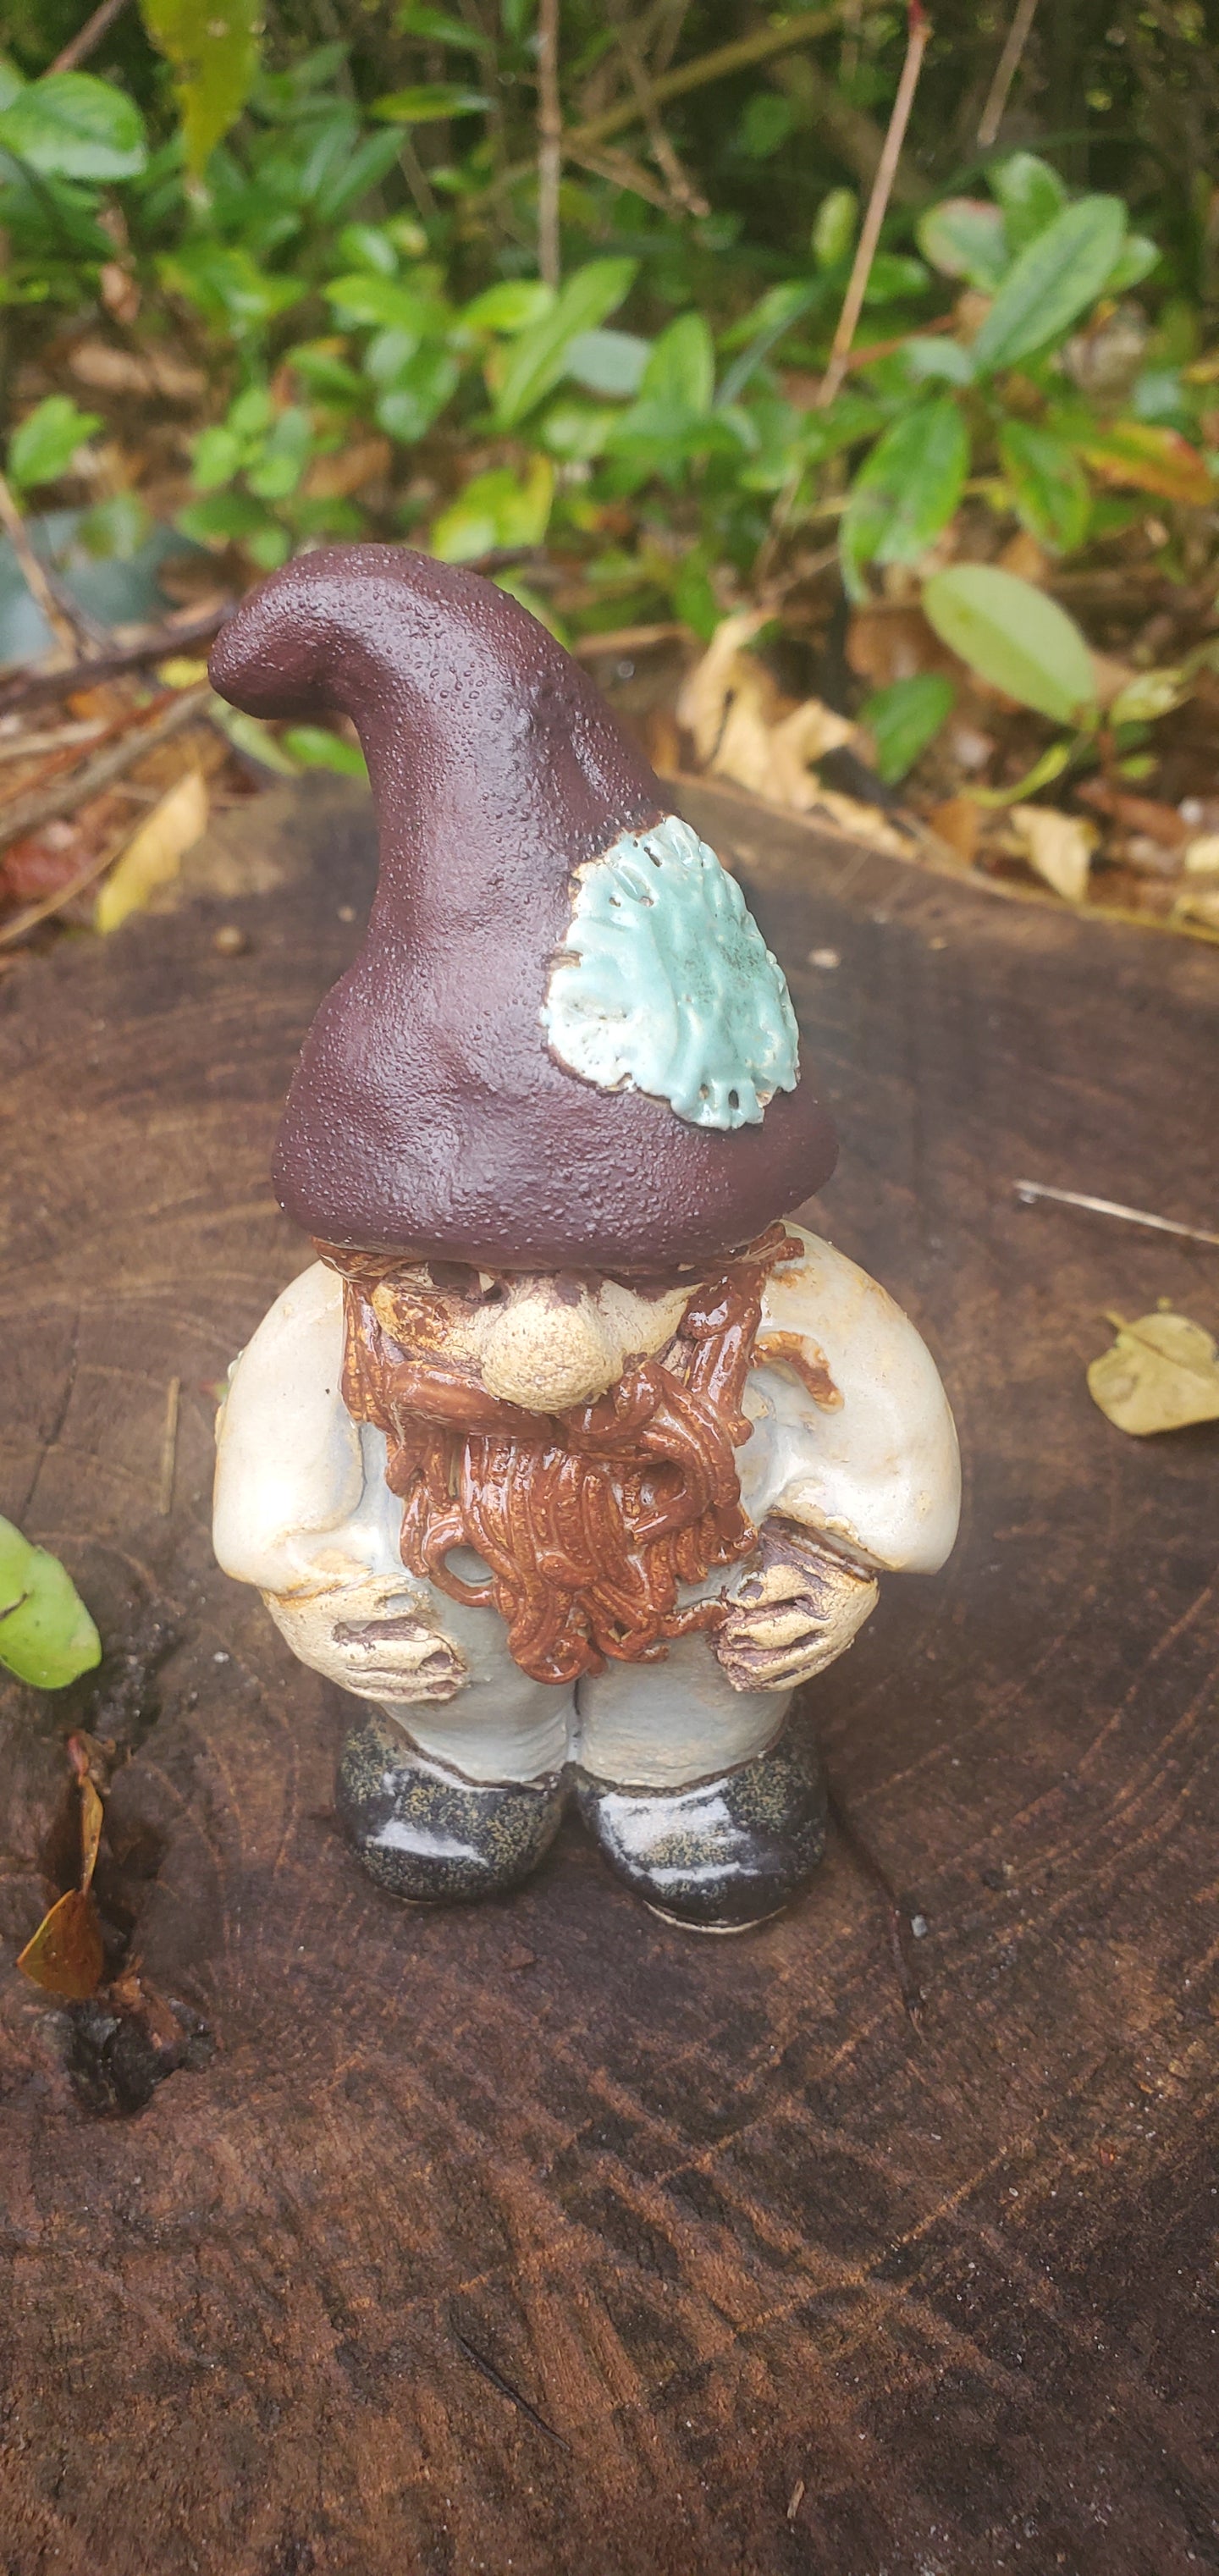 little gnomey homey 3 inch tall handmade ceramic scuplture